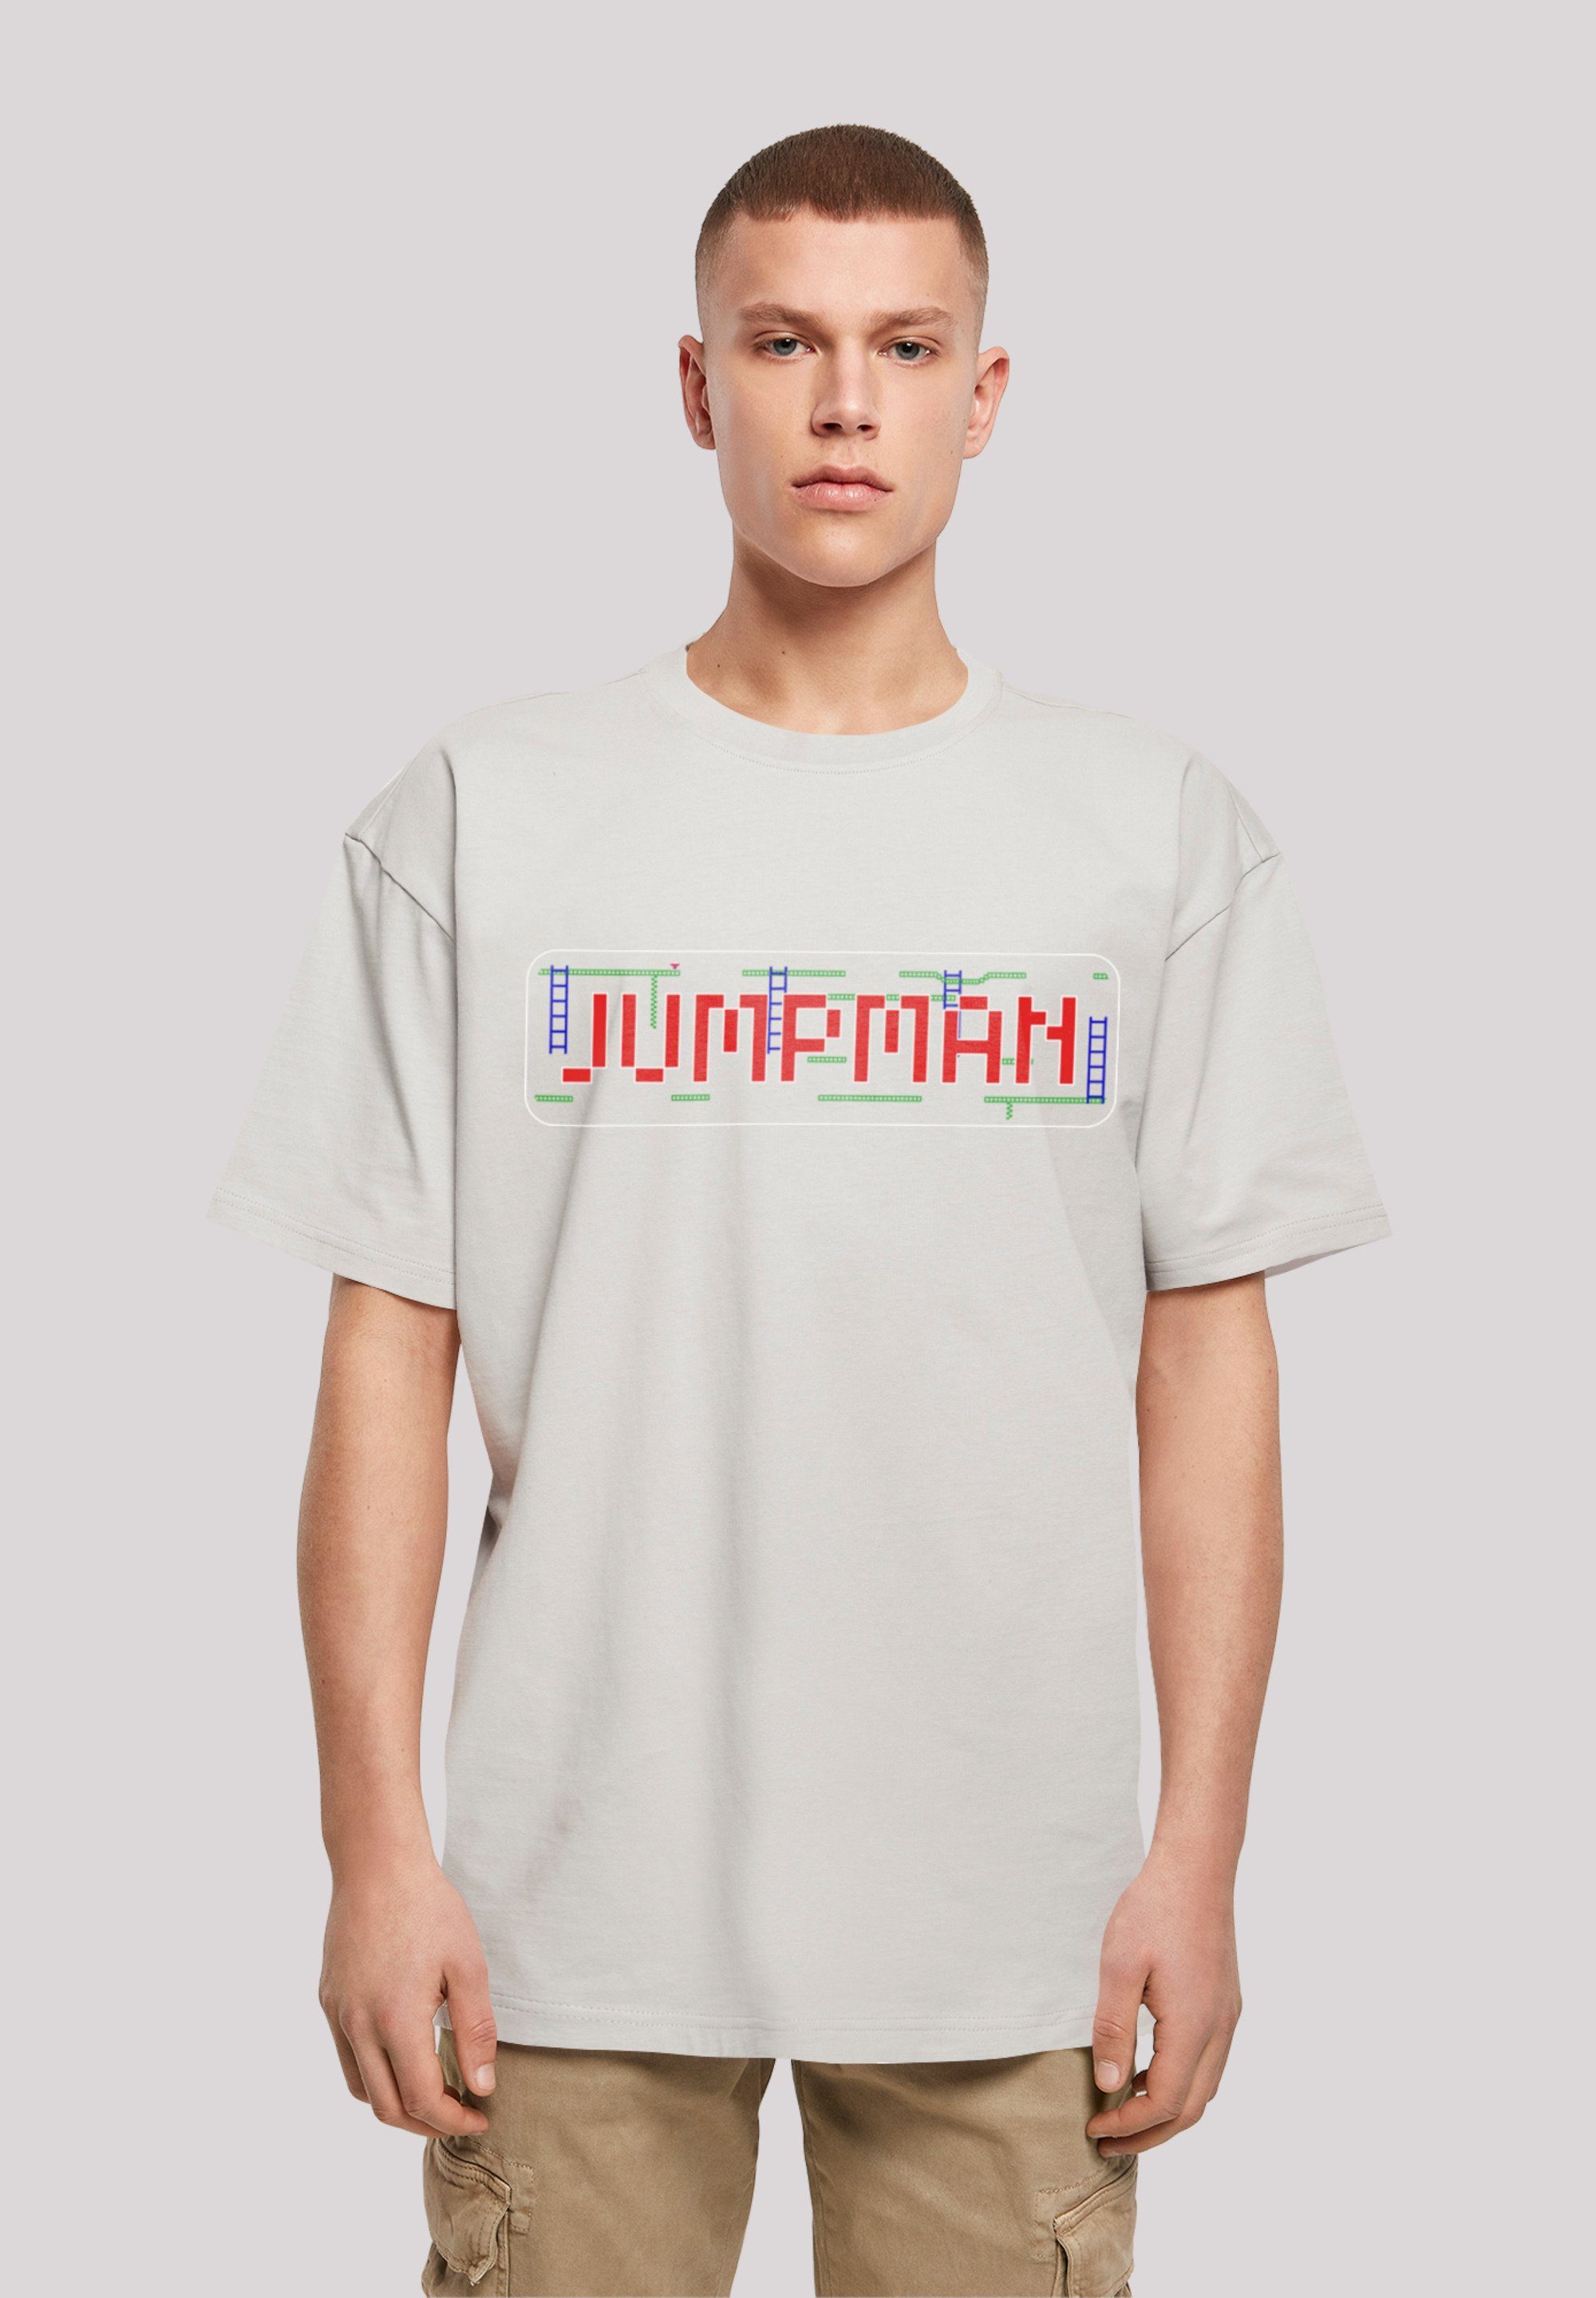 F4NT4STIC T-Shirt Jumpman C64 Retro Gaming SEVENSQUARED Print lightasphalt